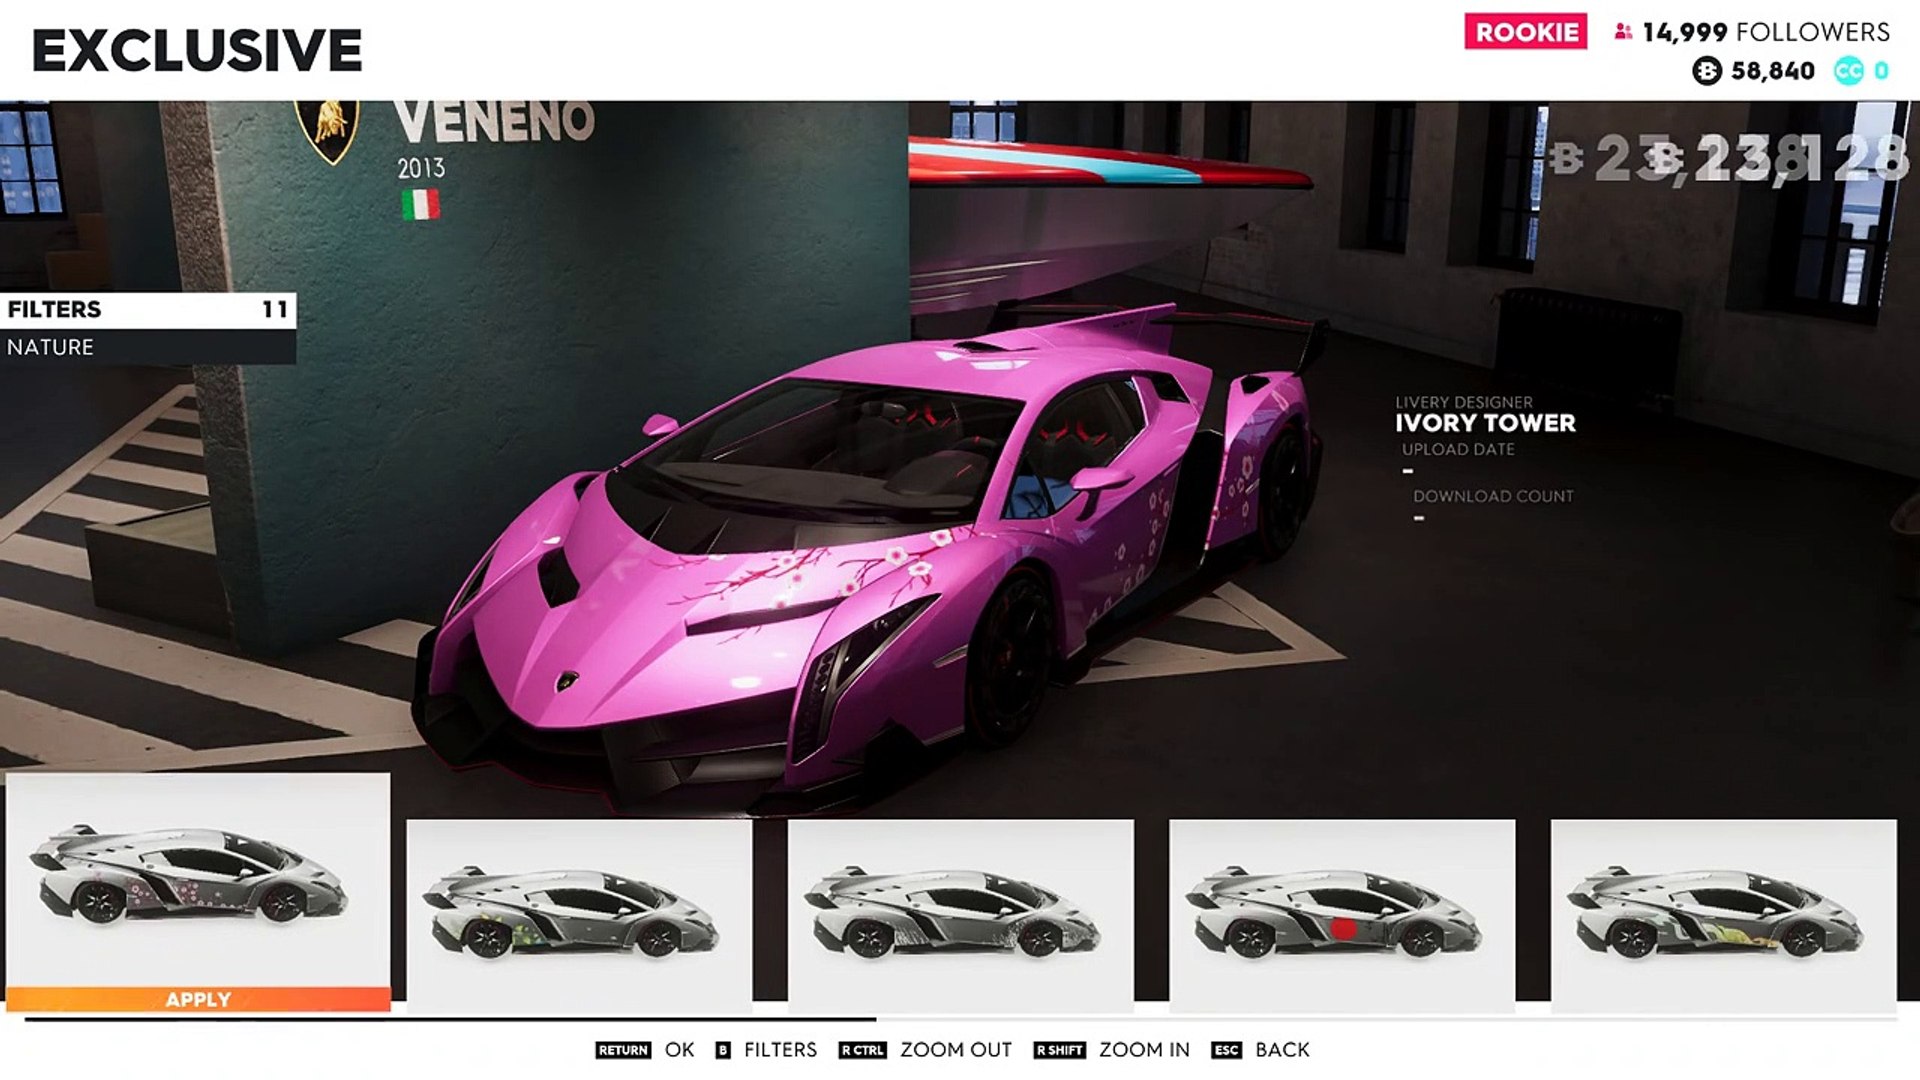 The Crew 2 Lamborghini Veneno Customization First Ever Customizable Veneno In A Racing Game Via Torchbrowser Com Video Dailymotion